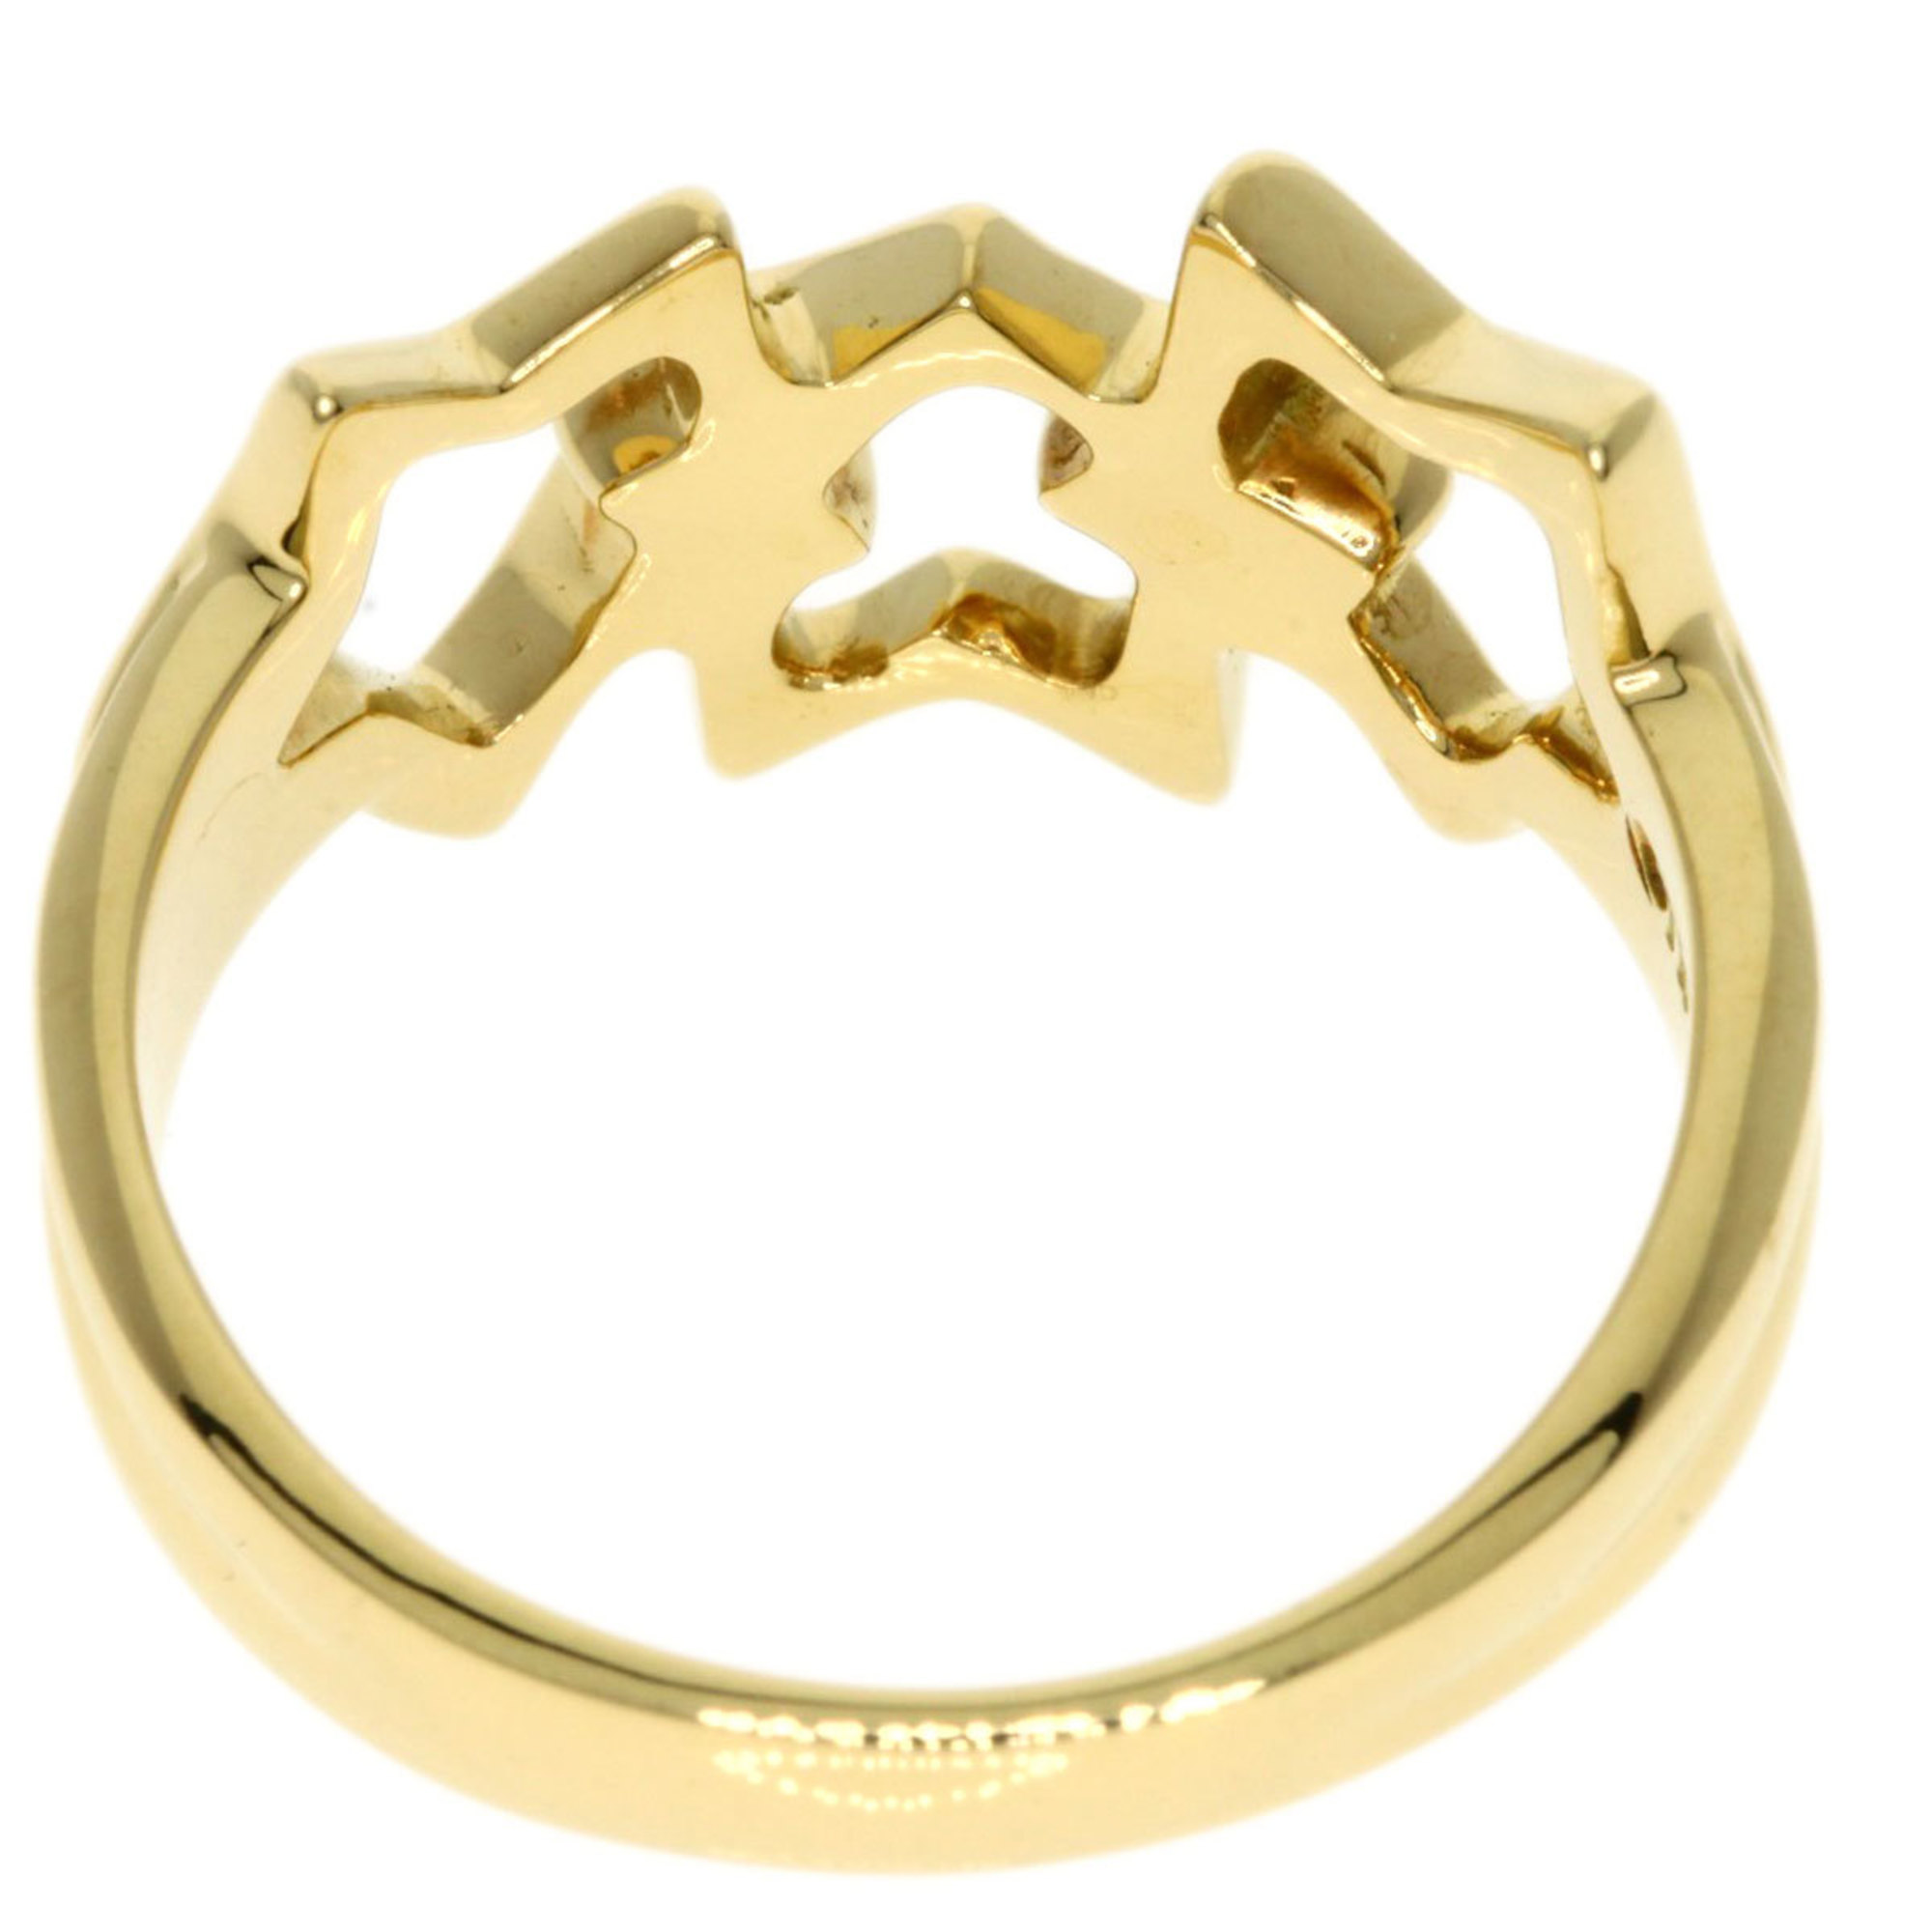 Tiffany & Co. Triple Star Ring, 18K Yellow Gold, Women's, TIFFANY